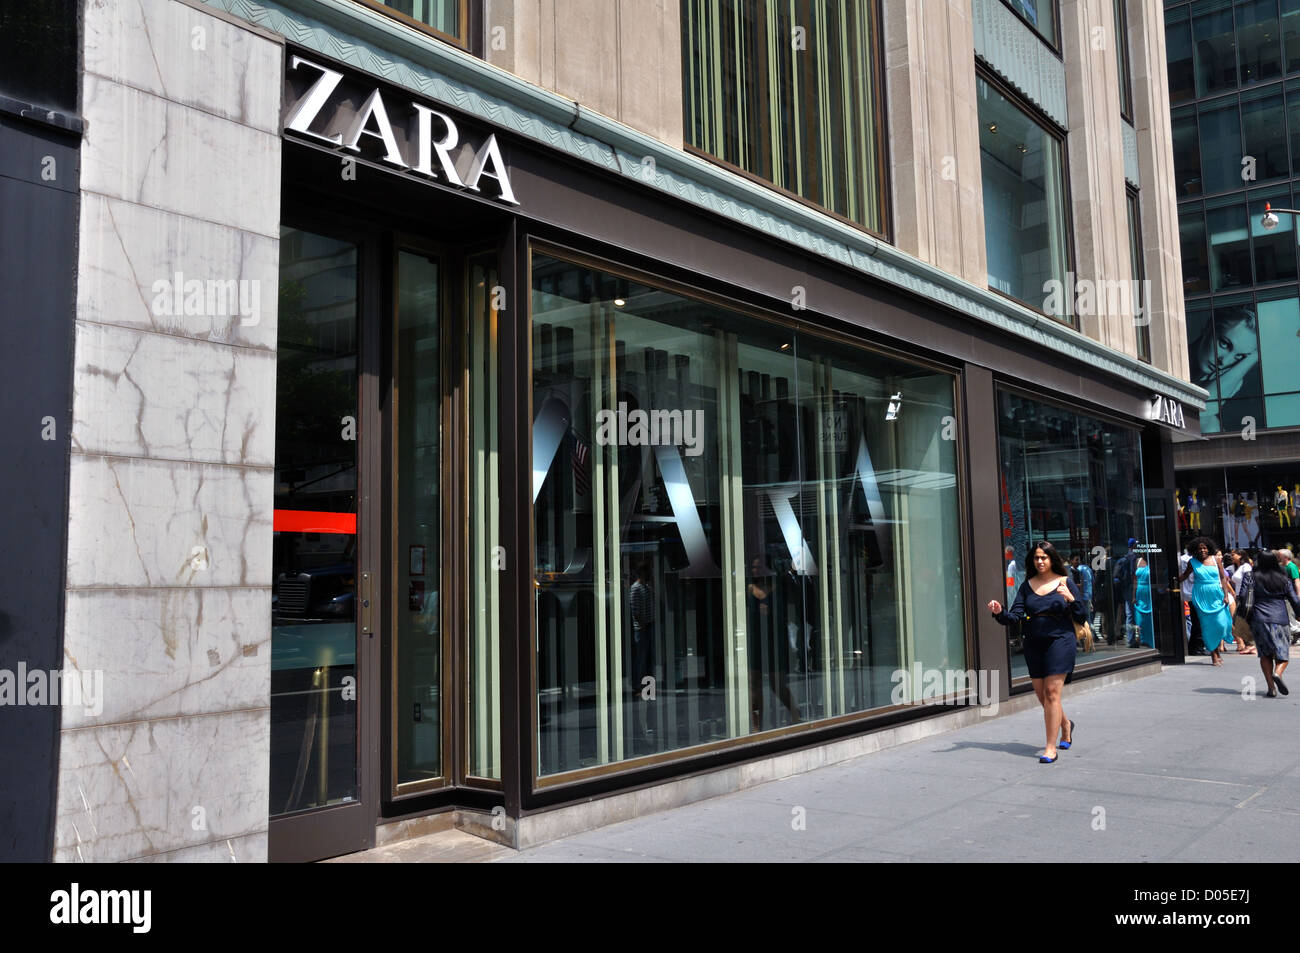 Zara Store Usa High Resolution Stock 